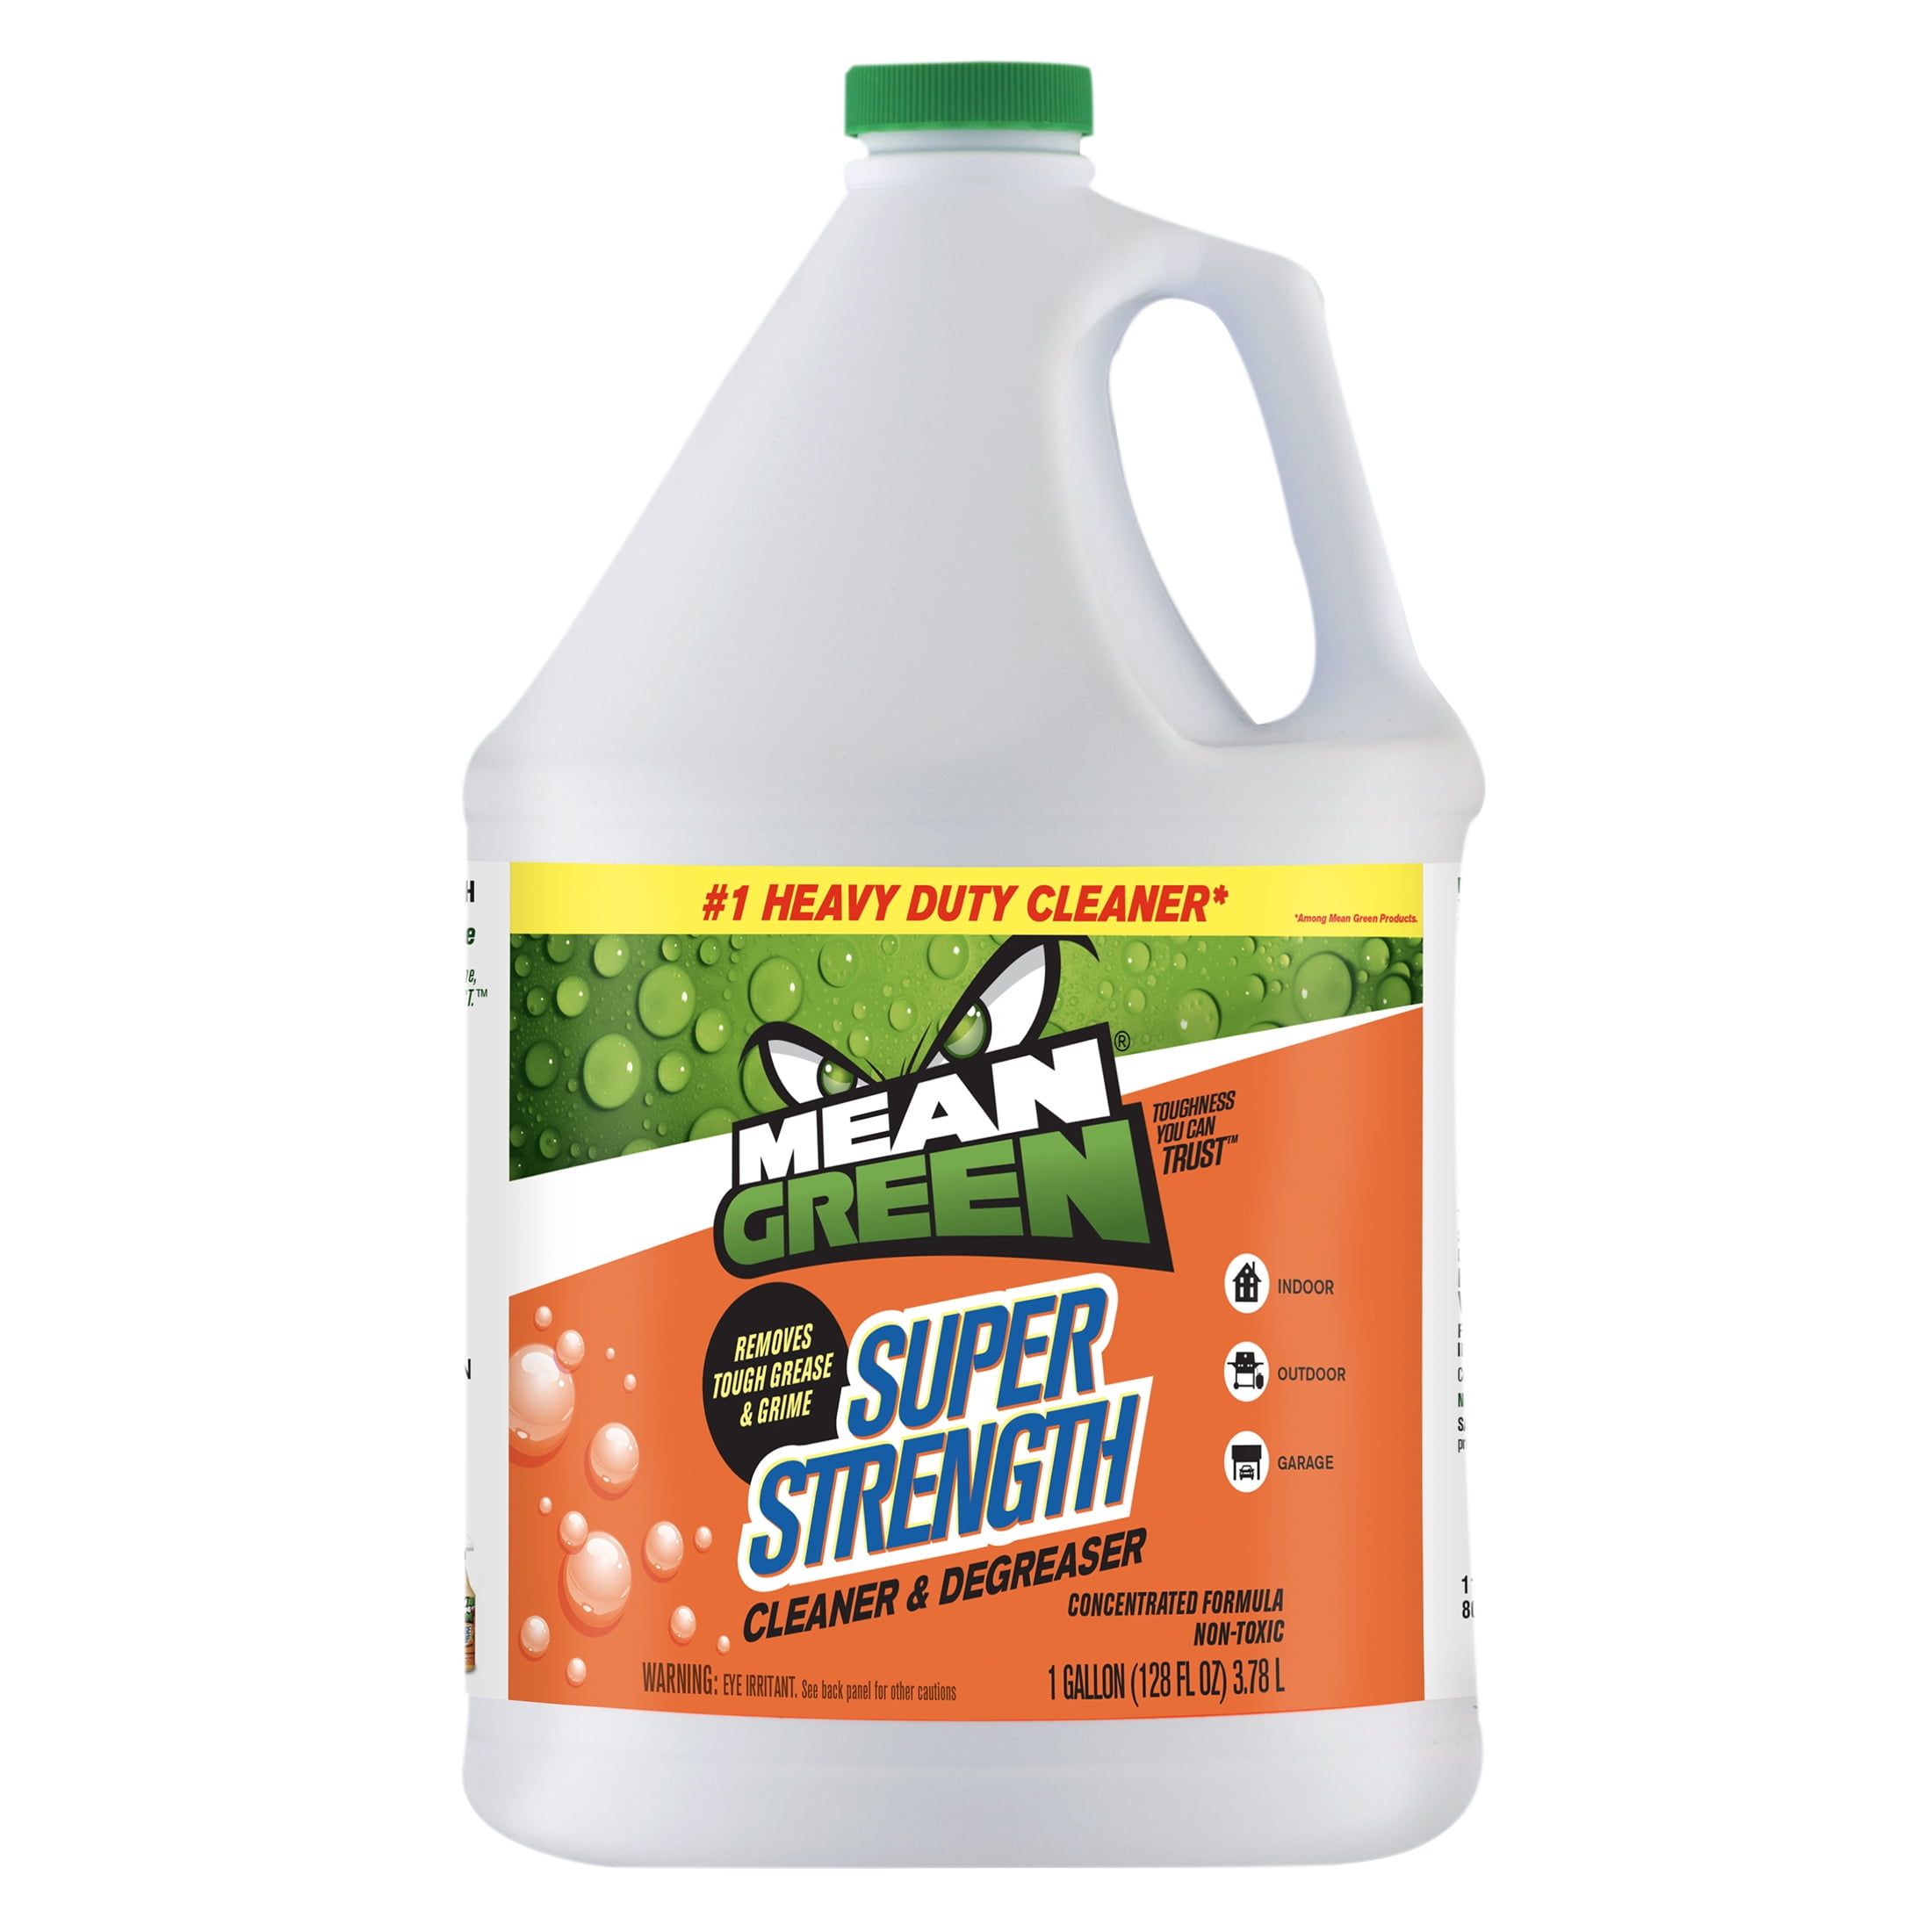 Mean Green Cleaner & Degreaser, Super Strength - 1 gallon, 128 fl oz